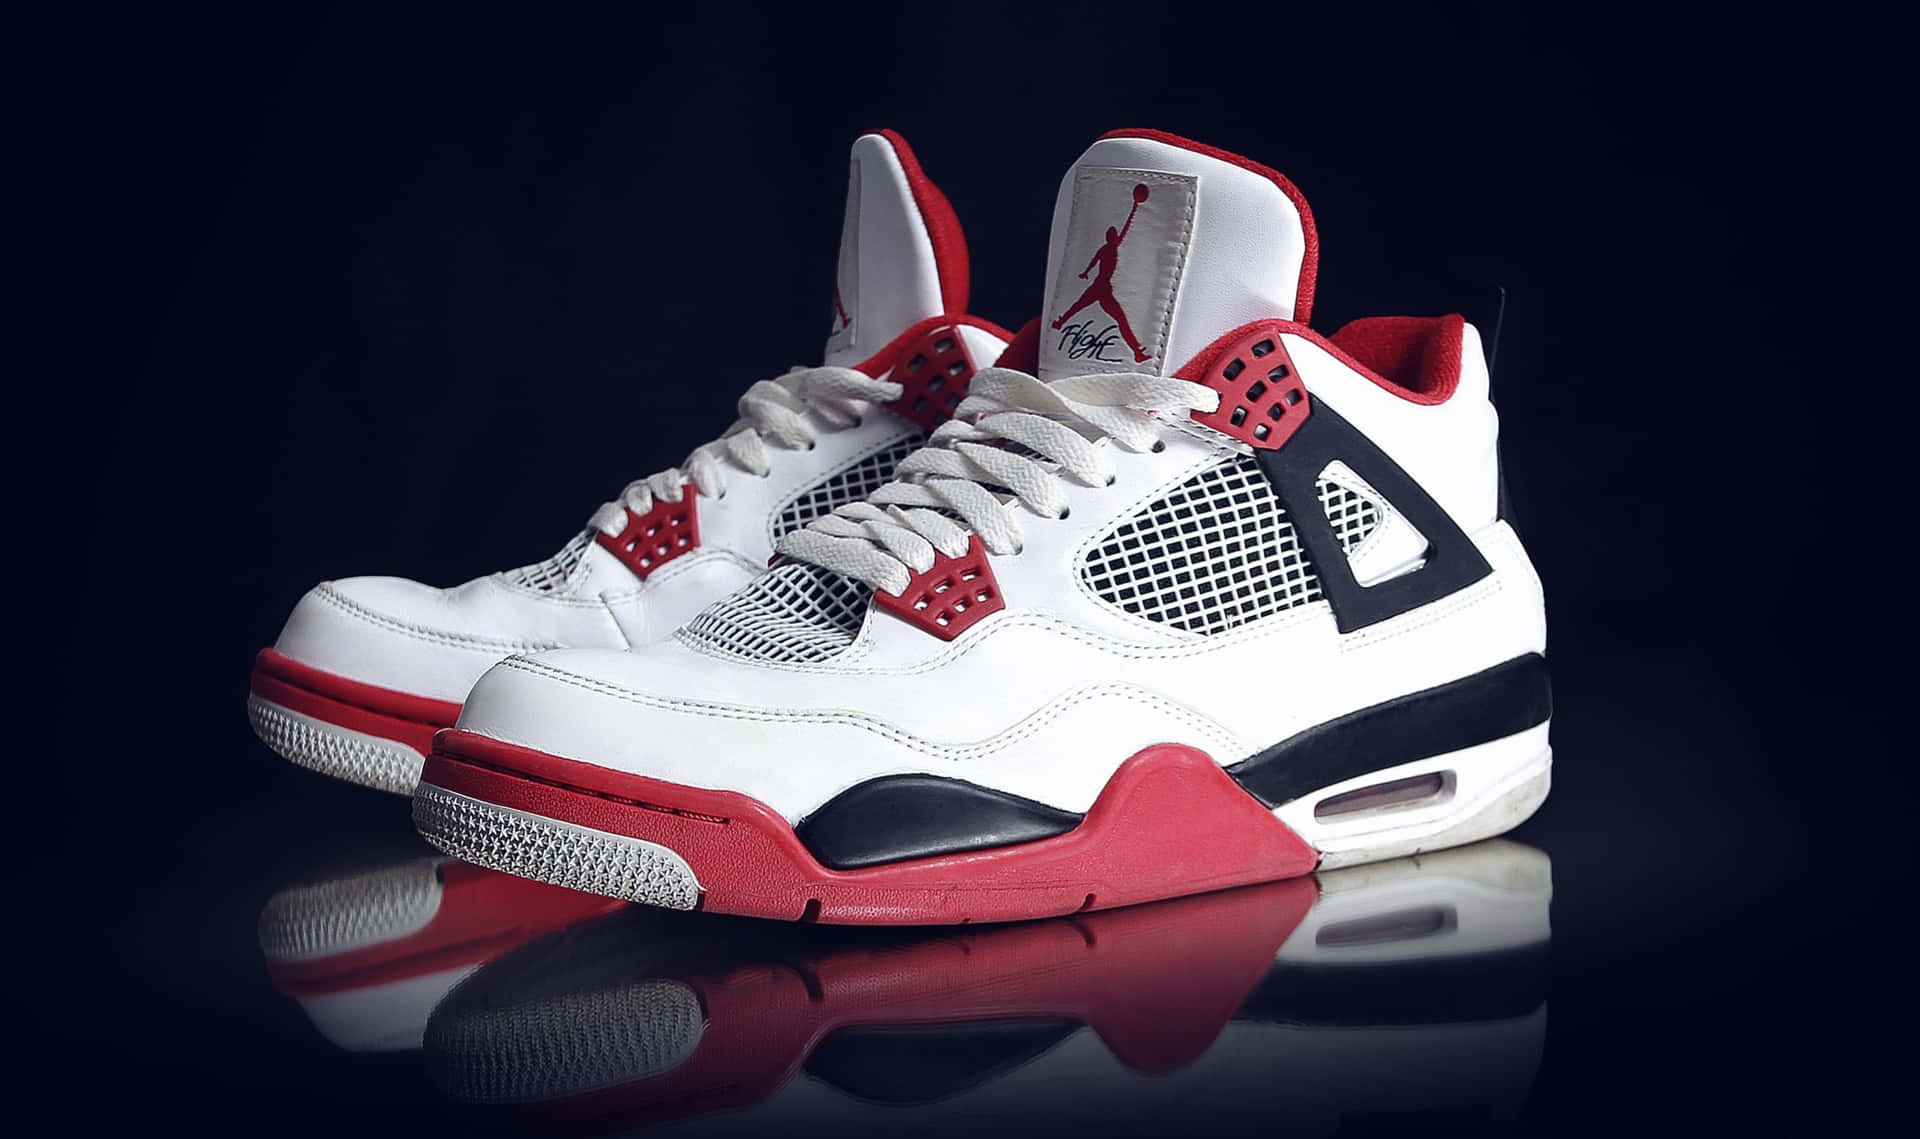 Einpaar Weißer Und Roter Air Jordan 4 Sneakers Wallpaper